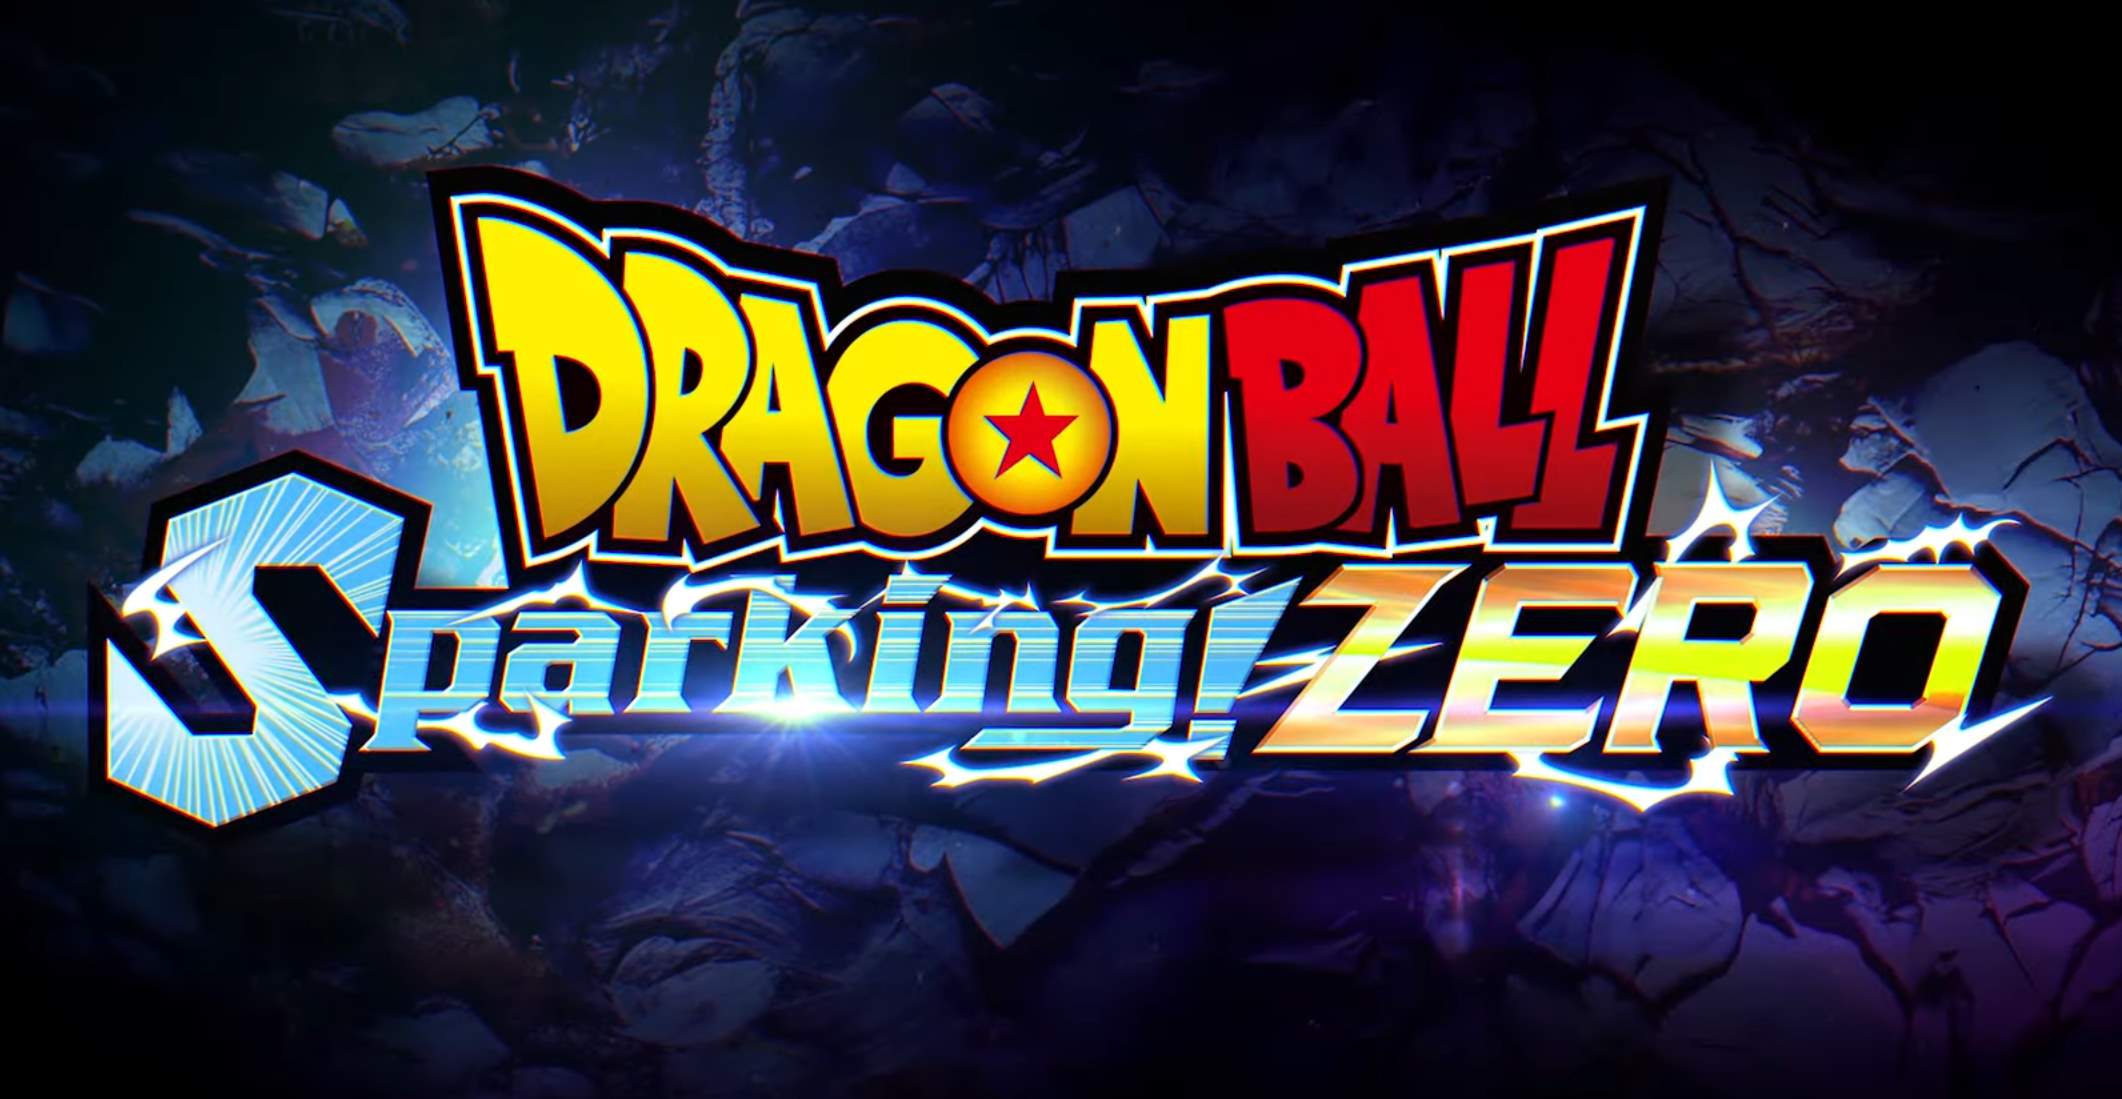 DRAGON BALL: Sparking! ZERO